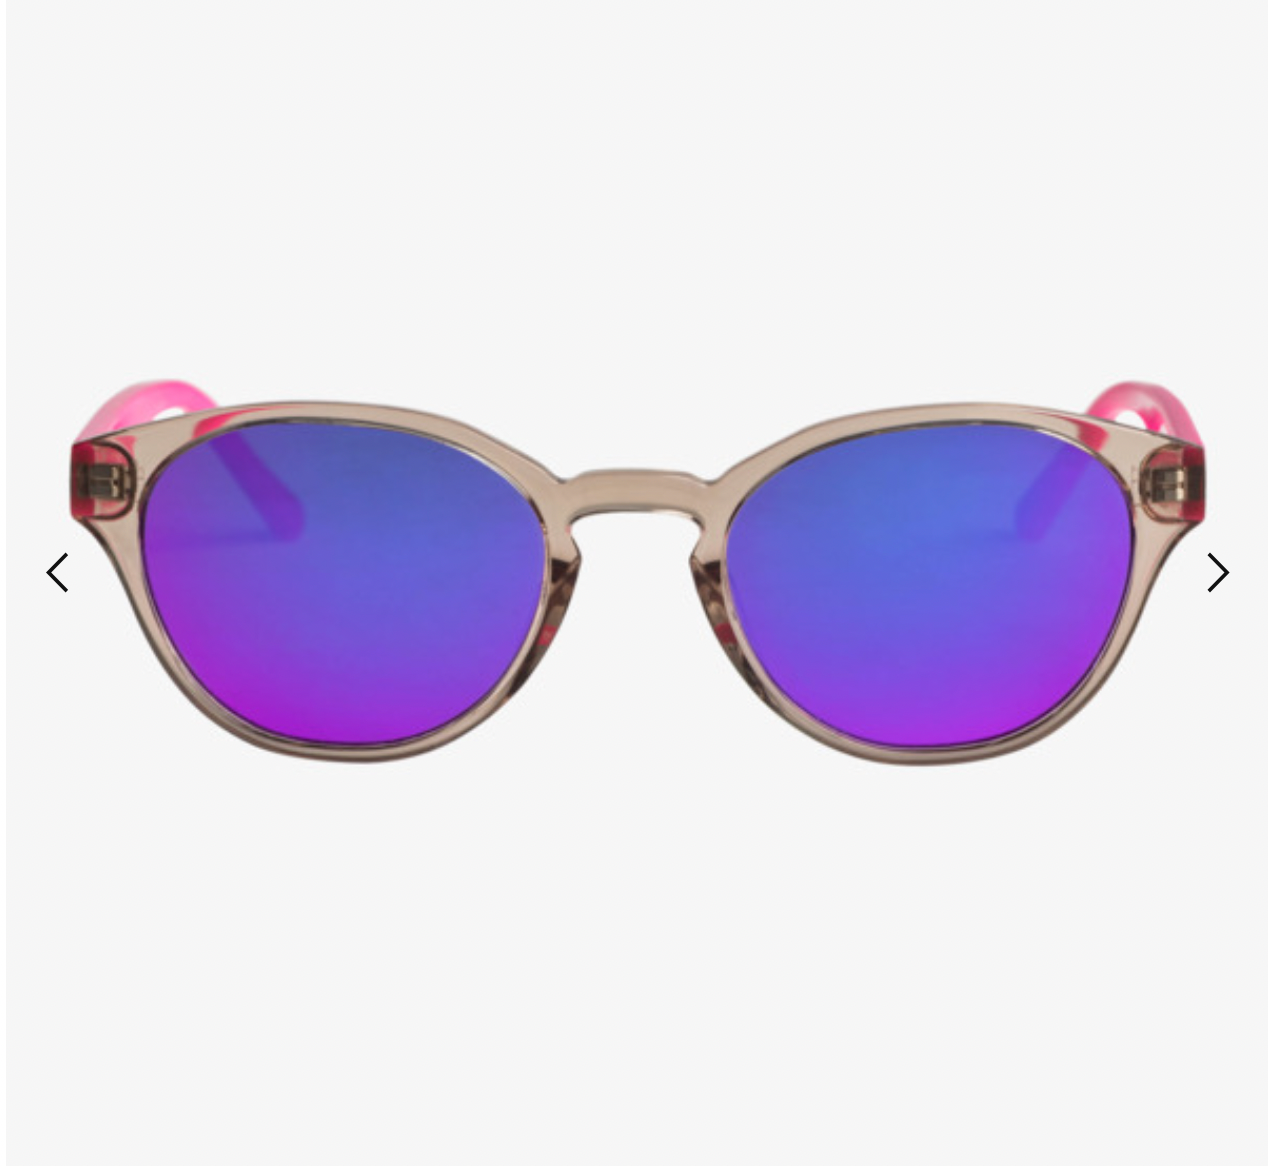 ROXY Lilou - Sunglasses for Girls